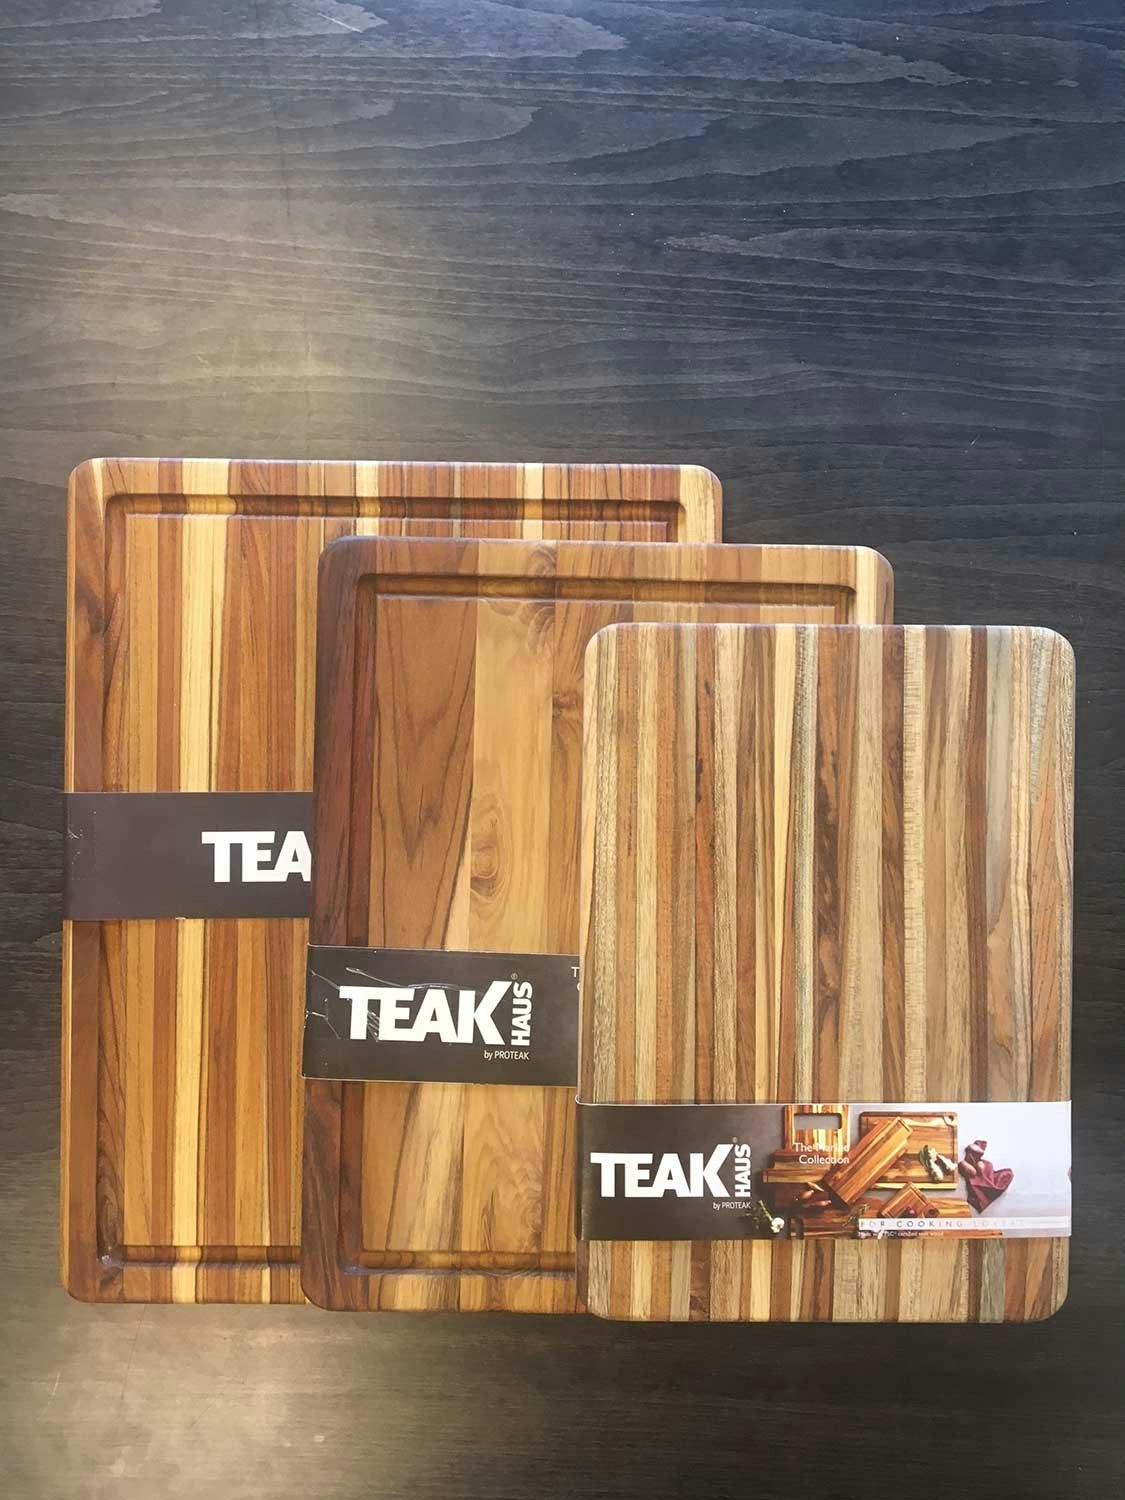 https://royaldesign.com/image/2/teakhaus-fsc-certified-teakreversable-carvingboard-medium-1